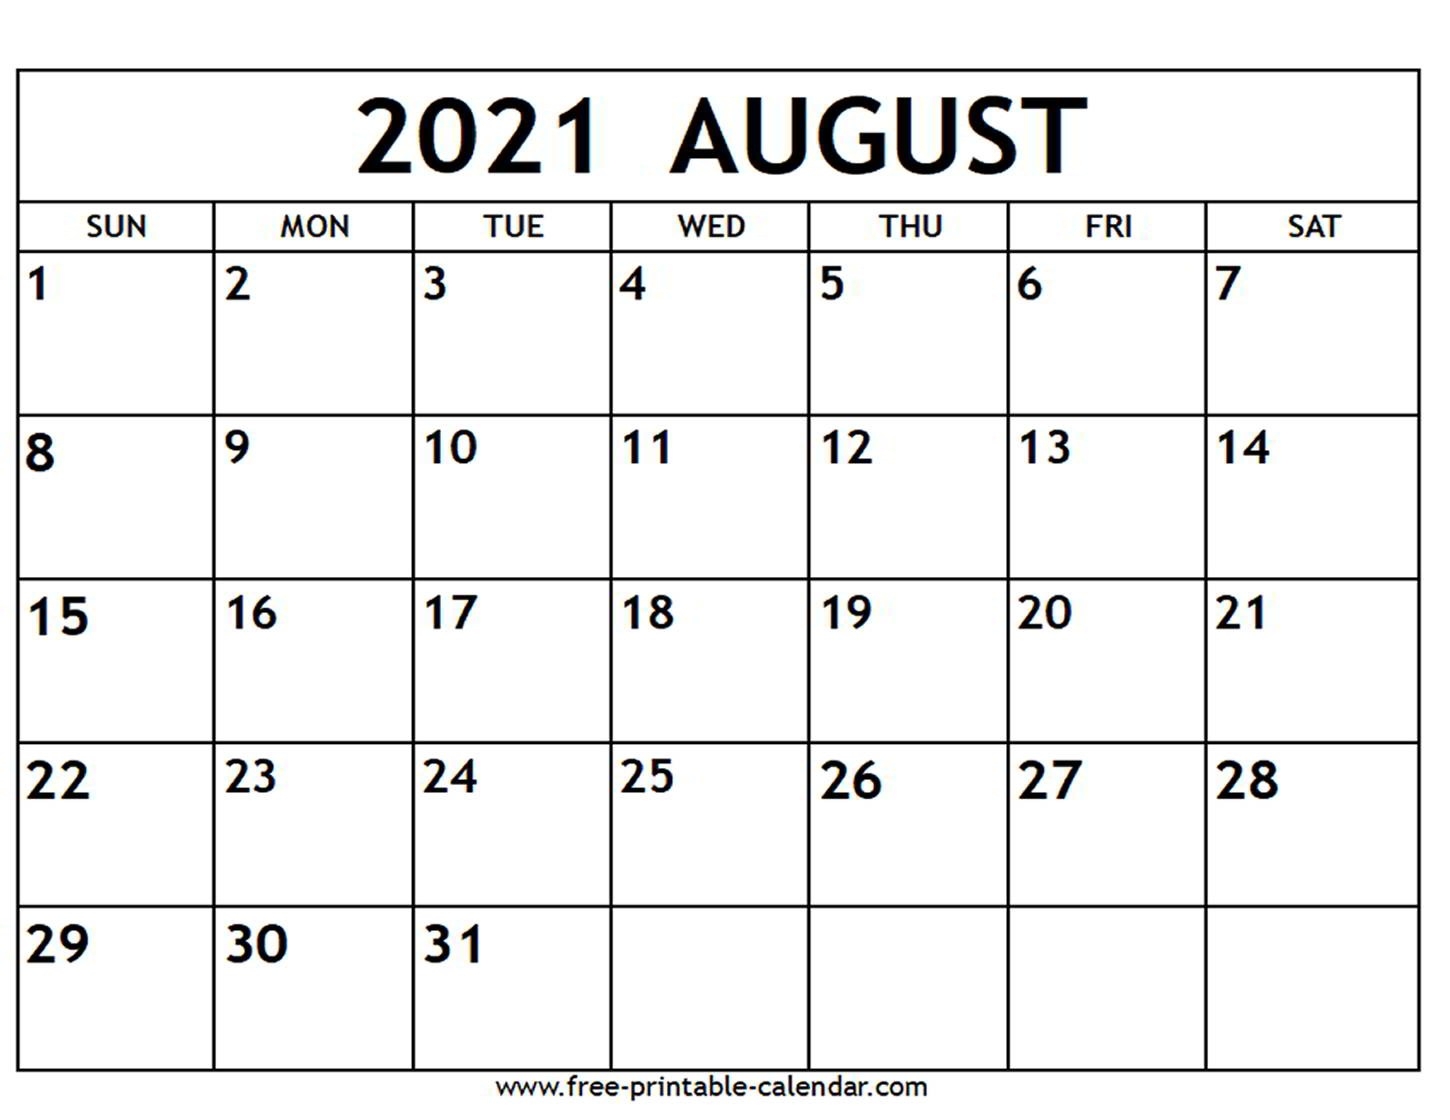 August 2021 Calendar - Free-Printable-Calendar-June July August 2021 Calendar Free Printable